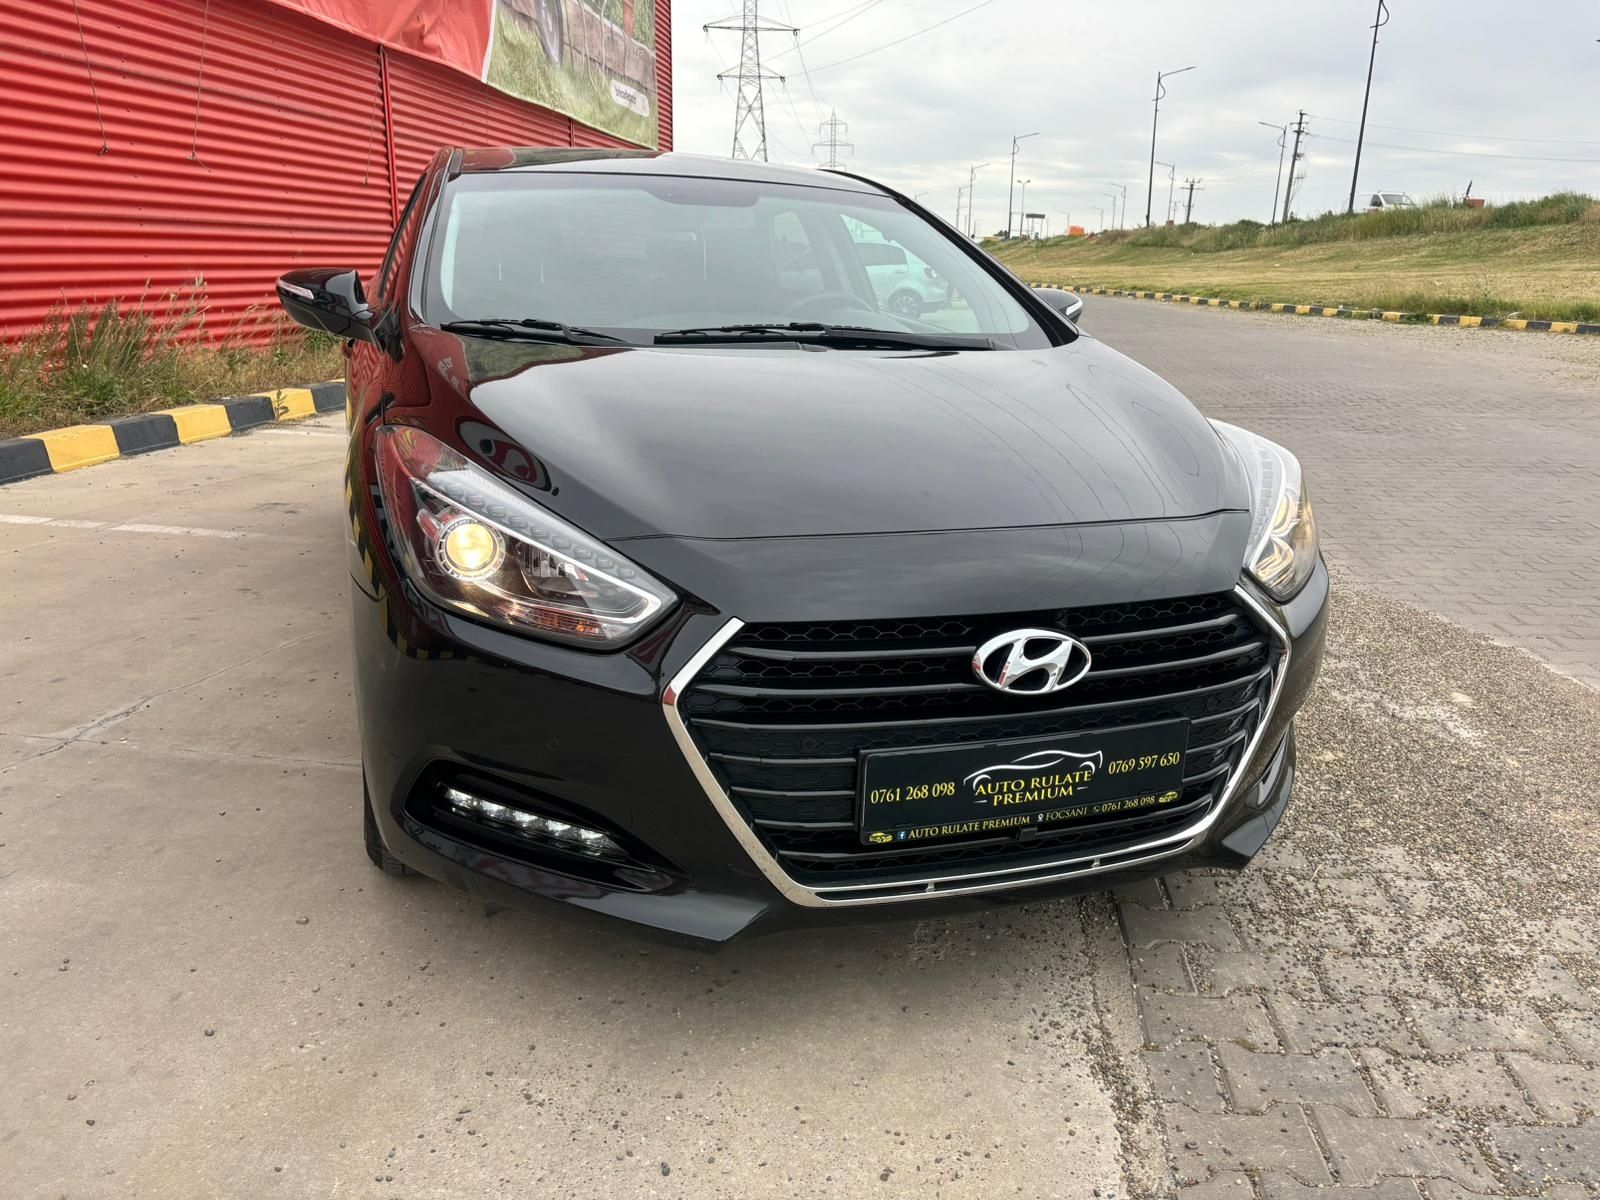 Hyundai i40 model 2018